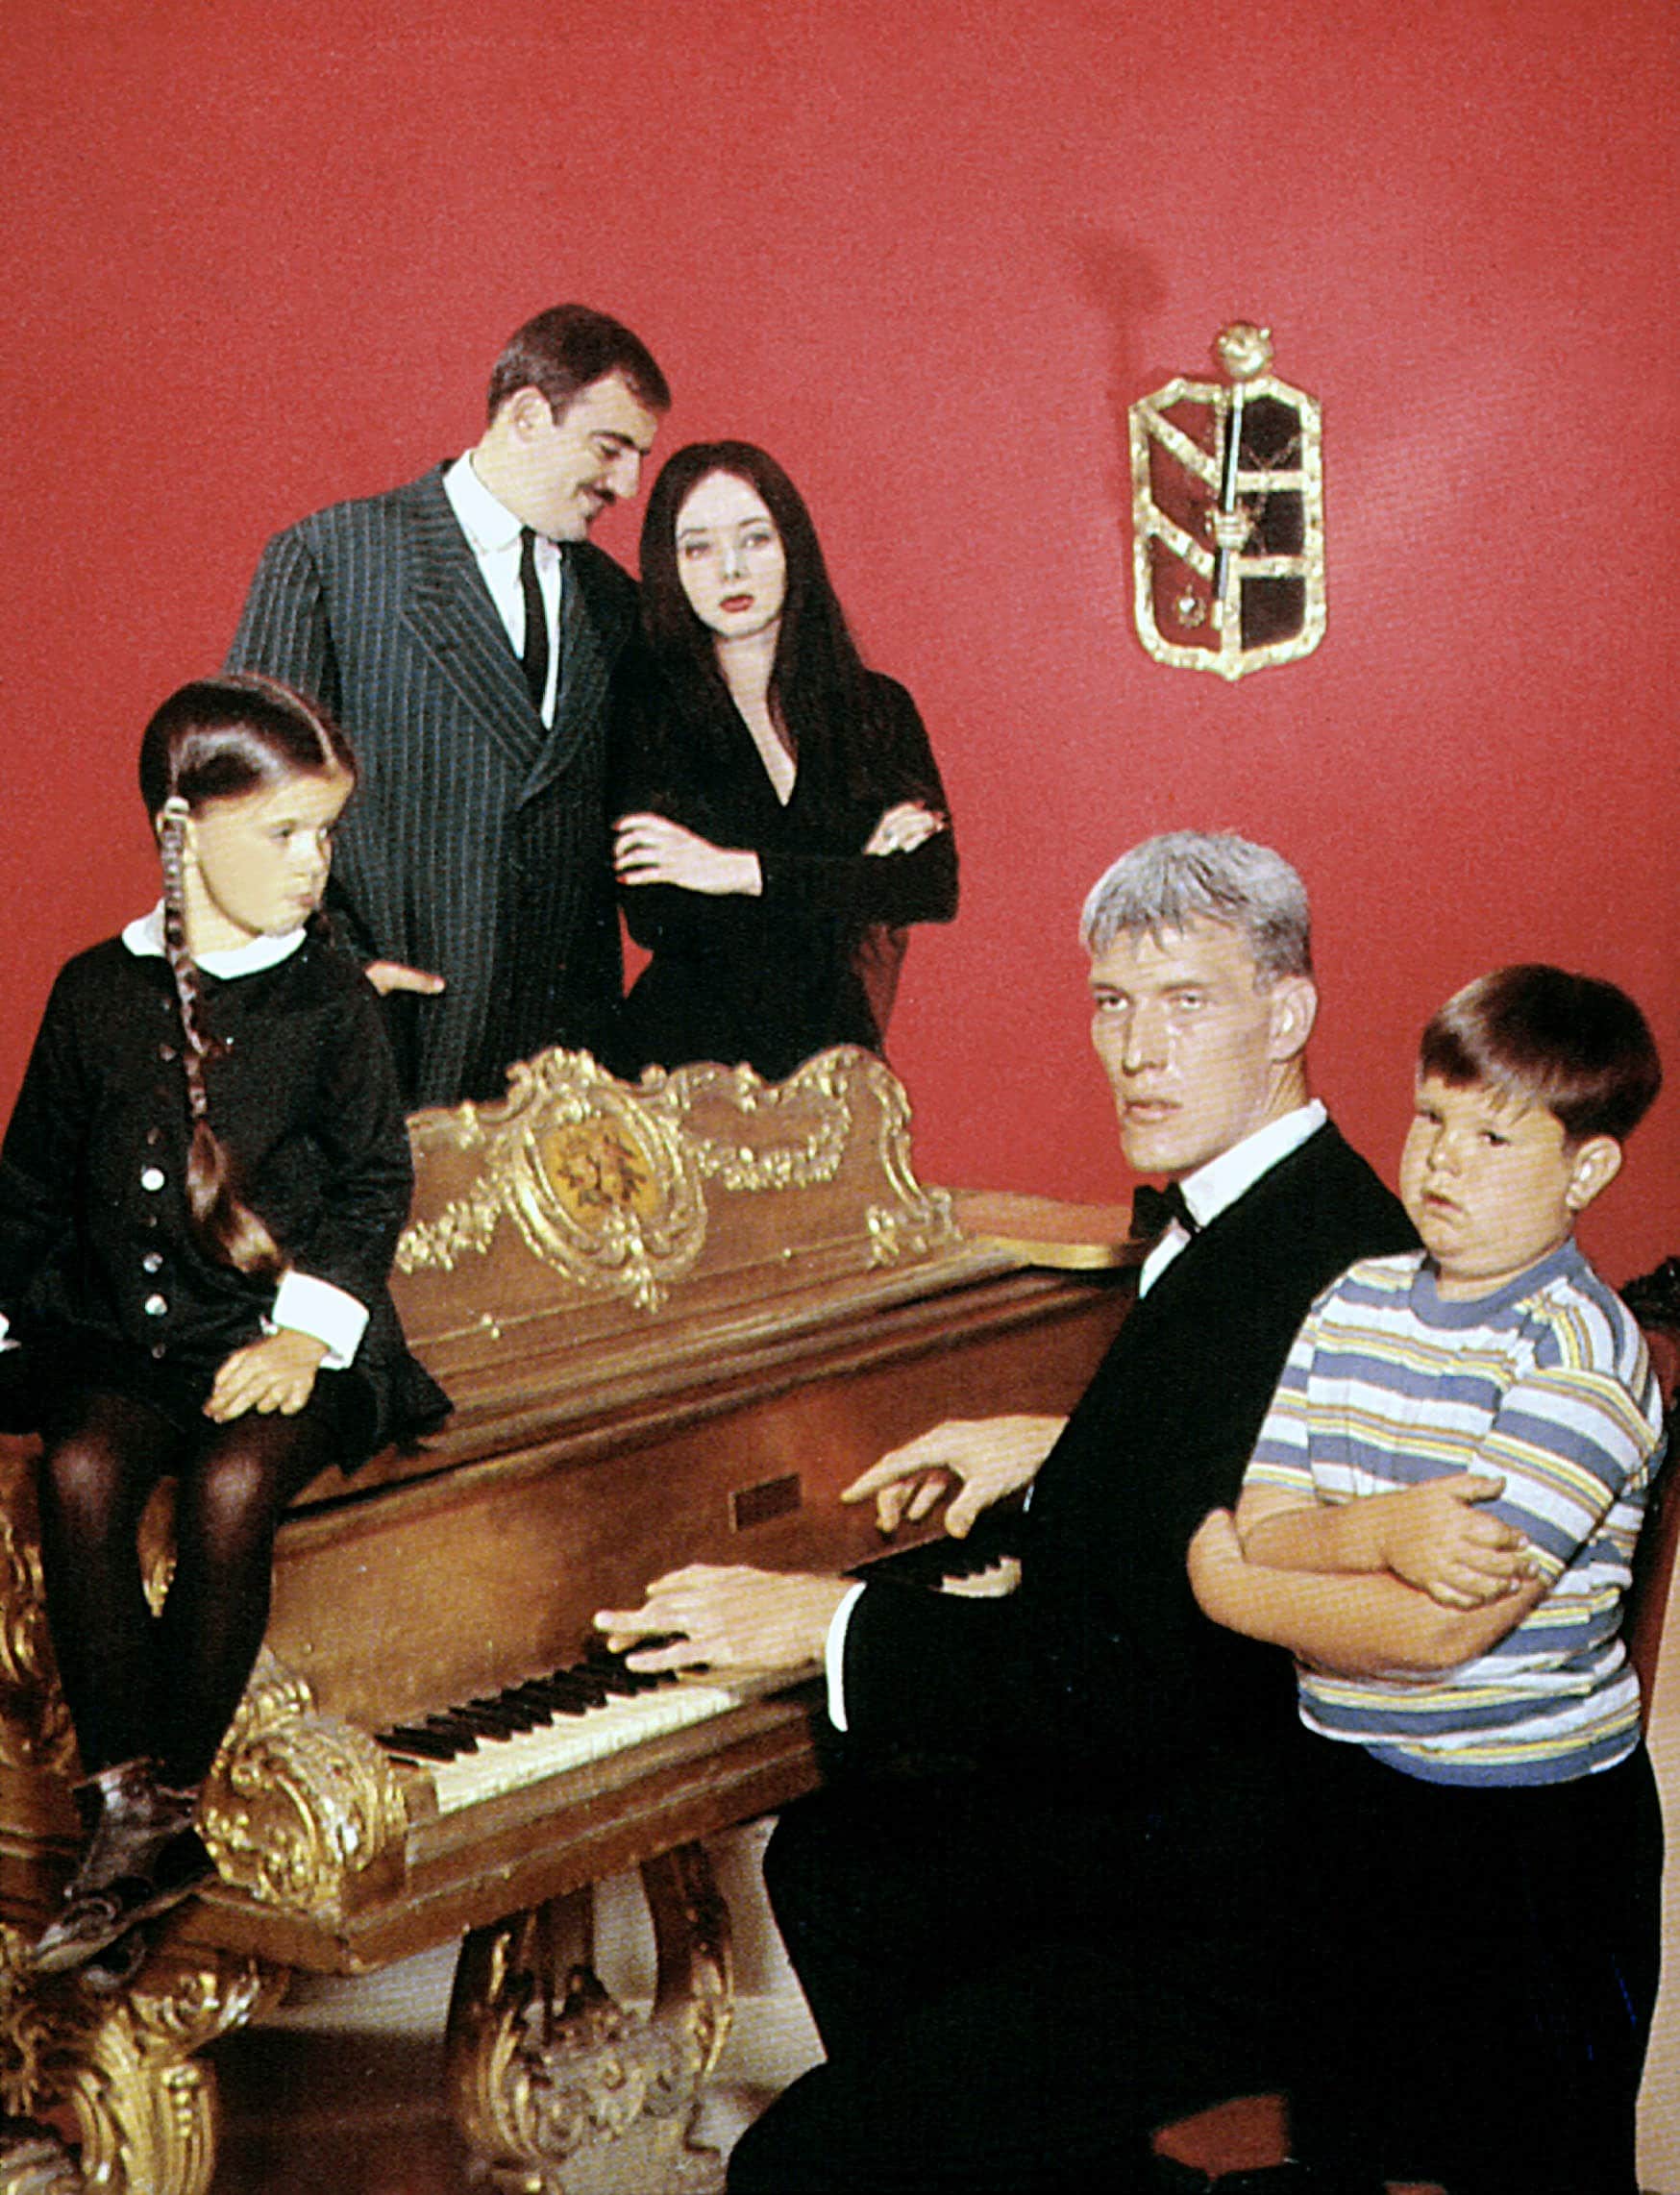 THE ADDAMS FAMILY, Lisa Loring, John Astin, Carolyn Jones, Ted Cassidy, Ken Weatherwax, 1964-1966 